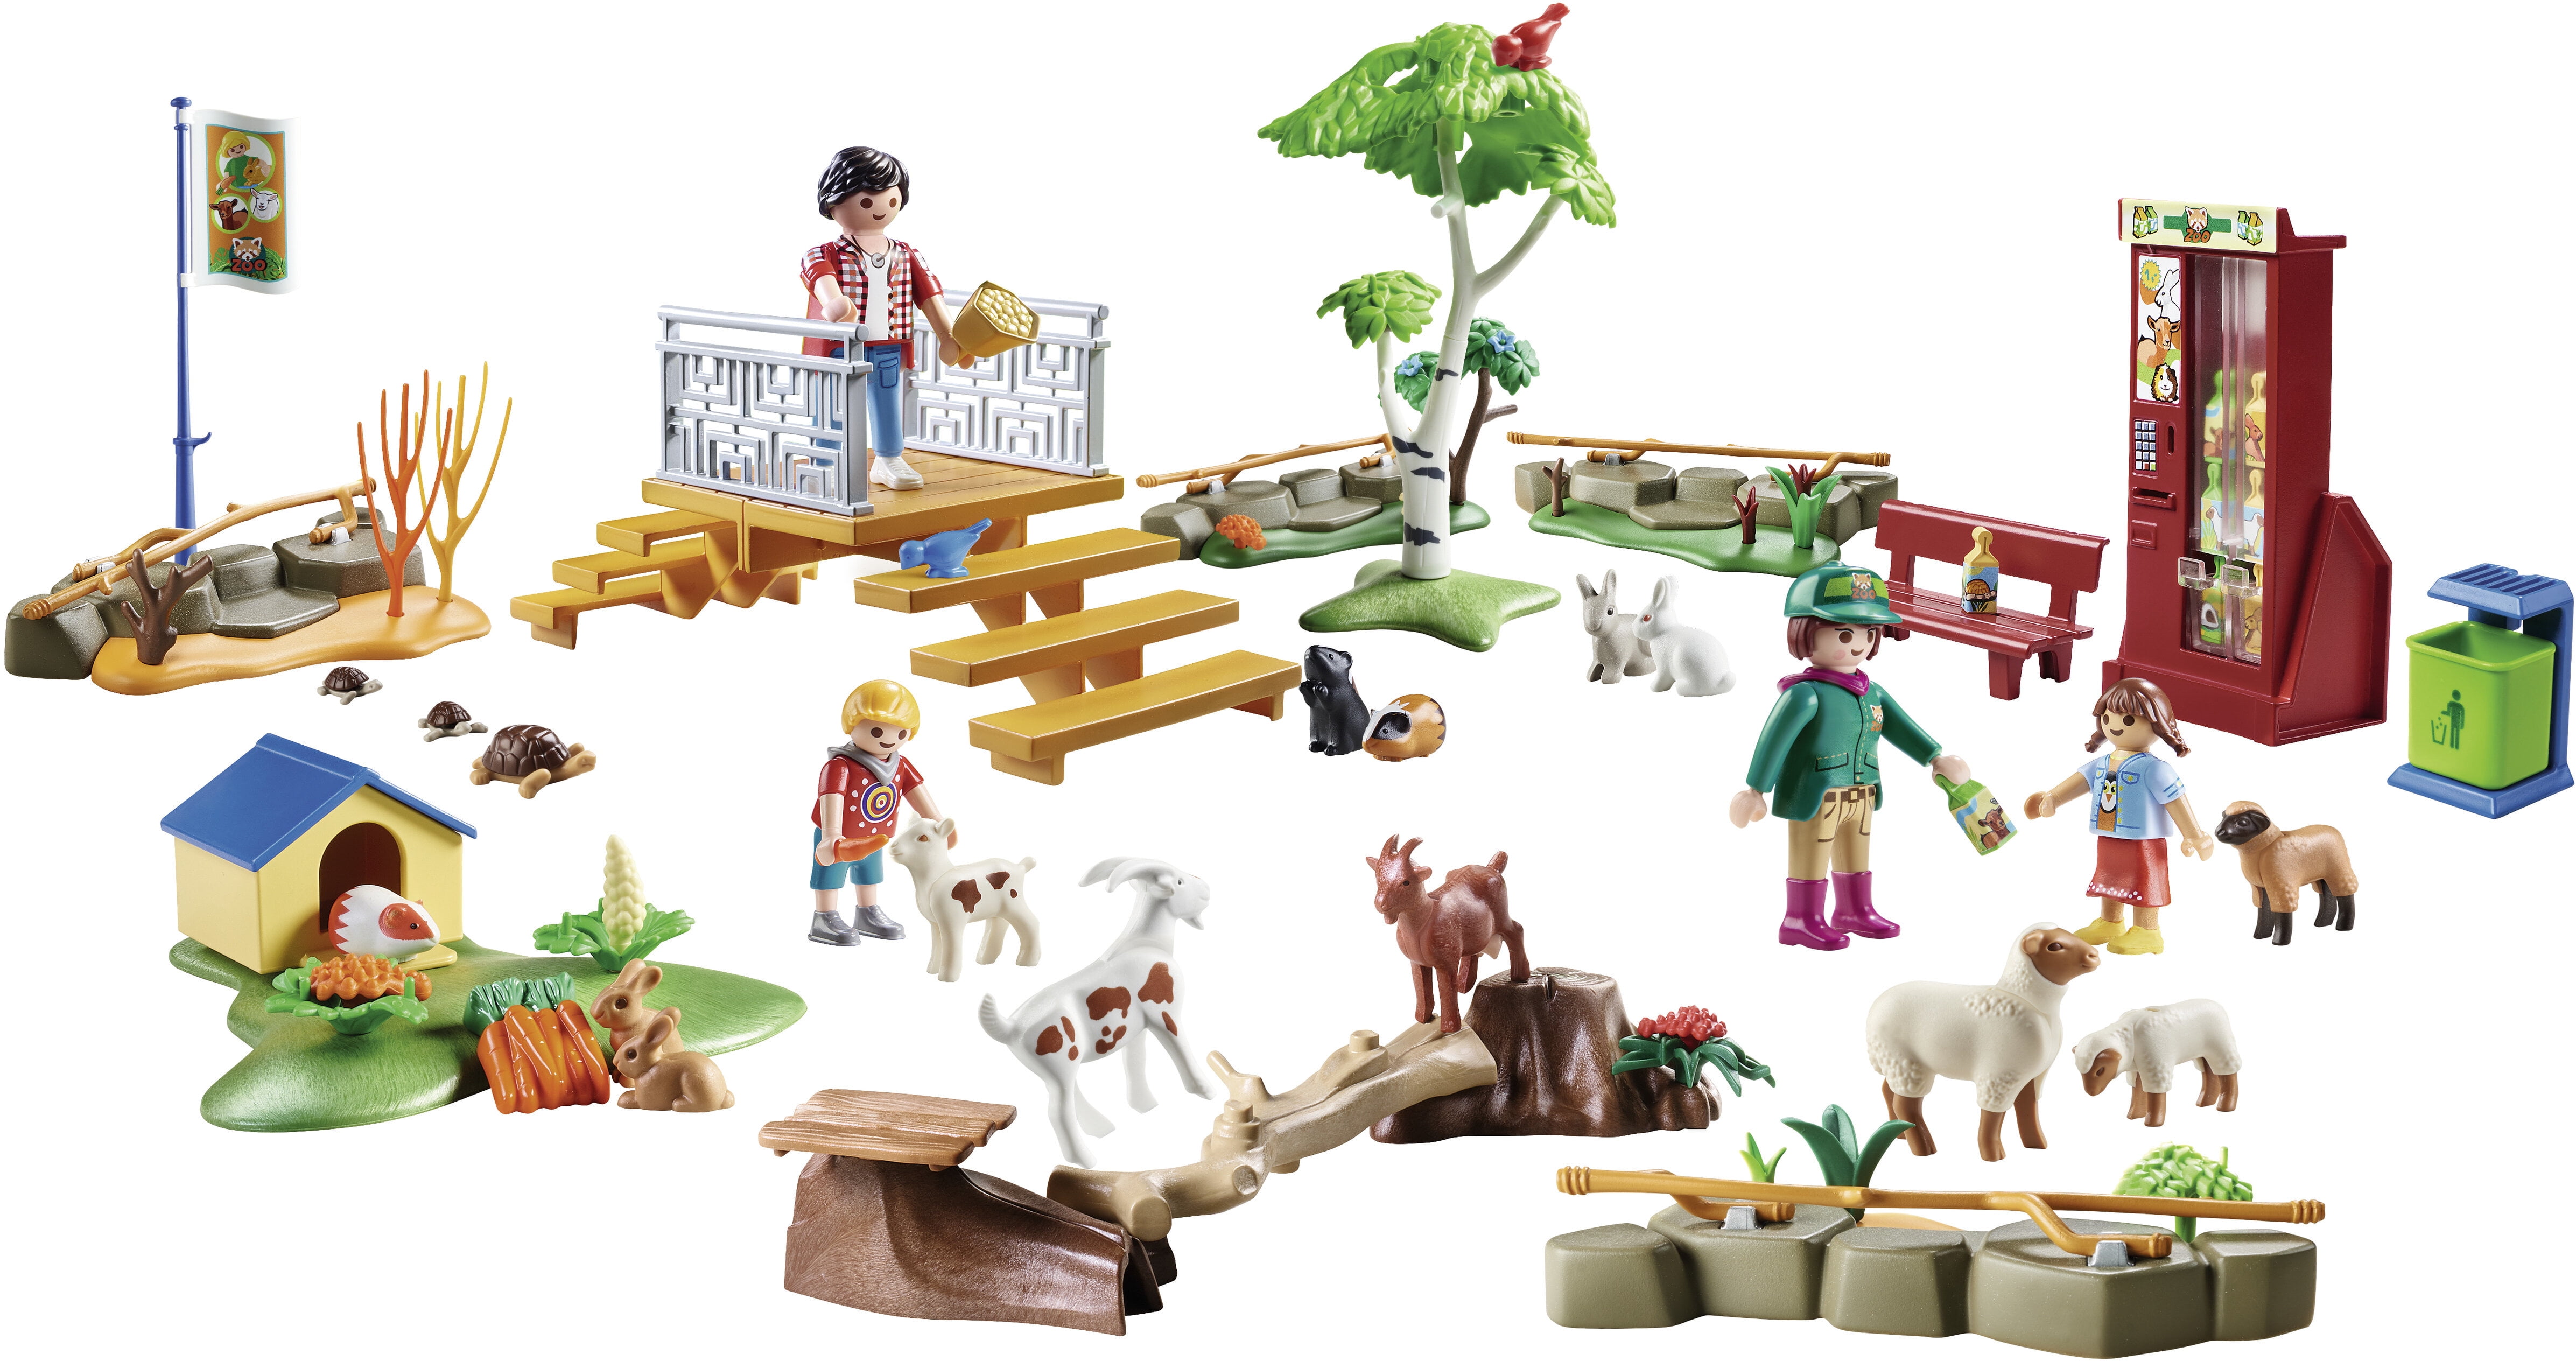  PLAYMOBIL Petting Zoo : Toys & Games